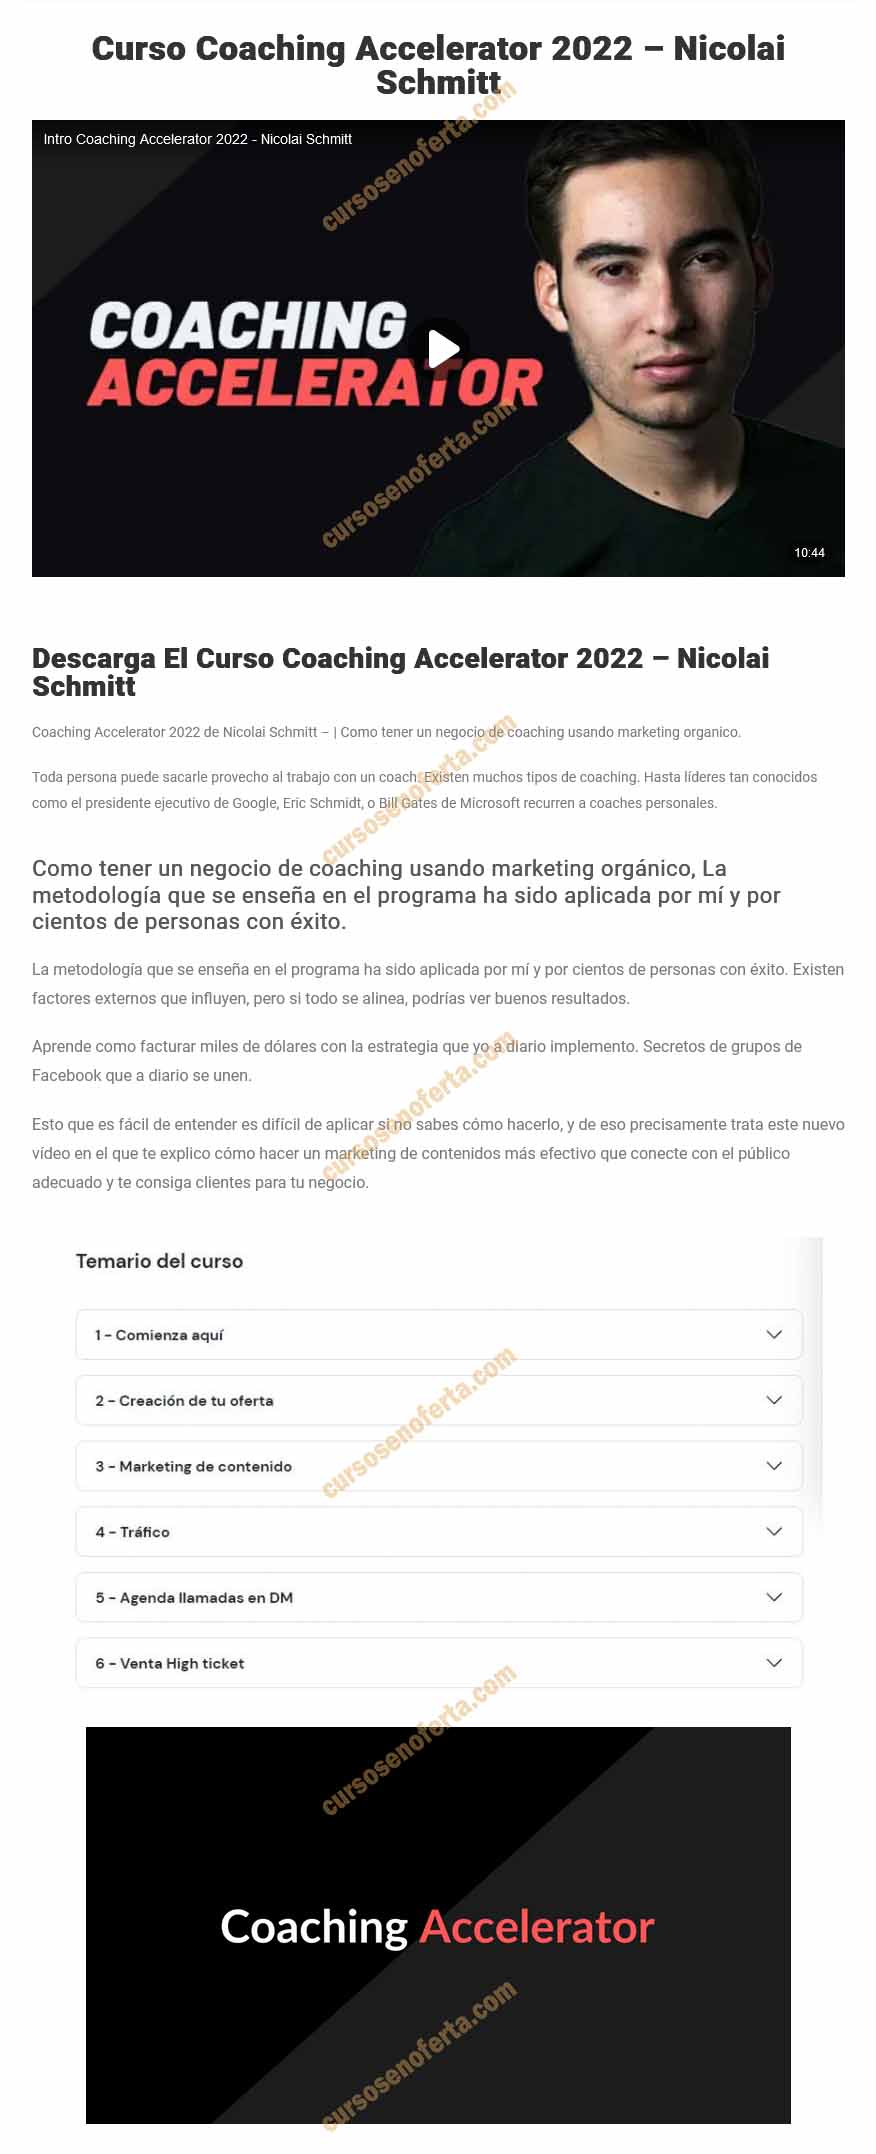 Coaching Accelerator - Nicolai Schmitt